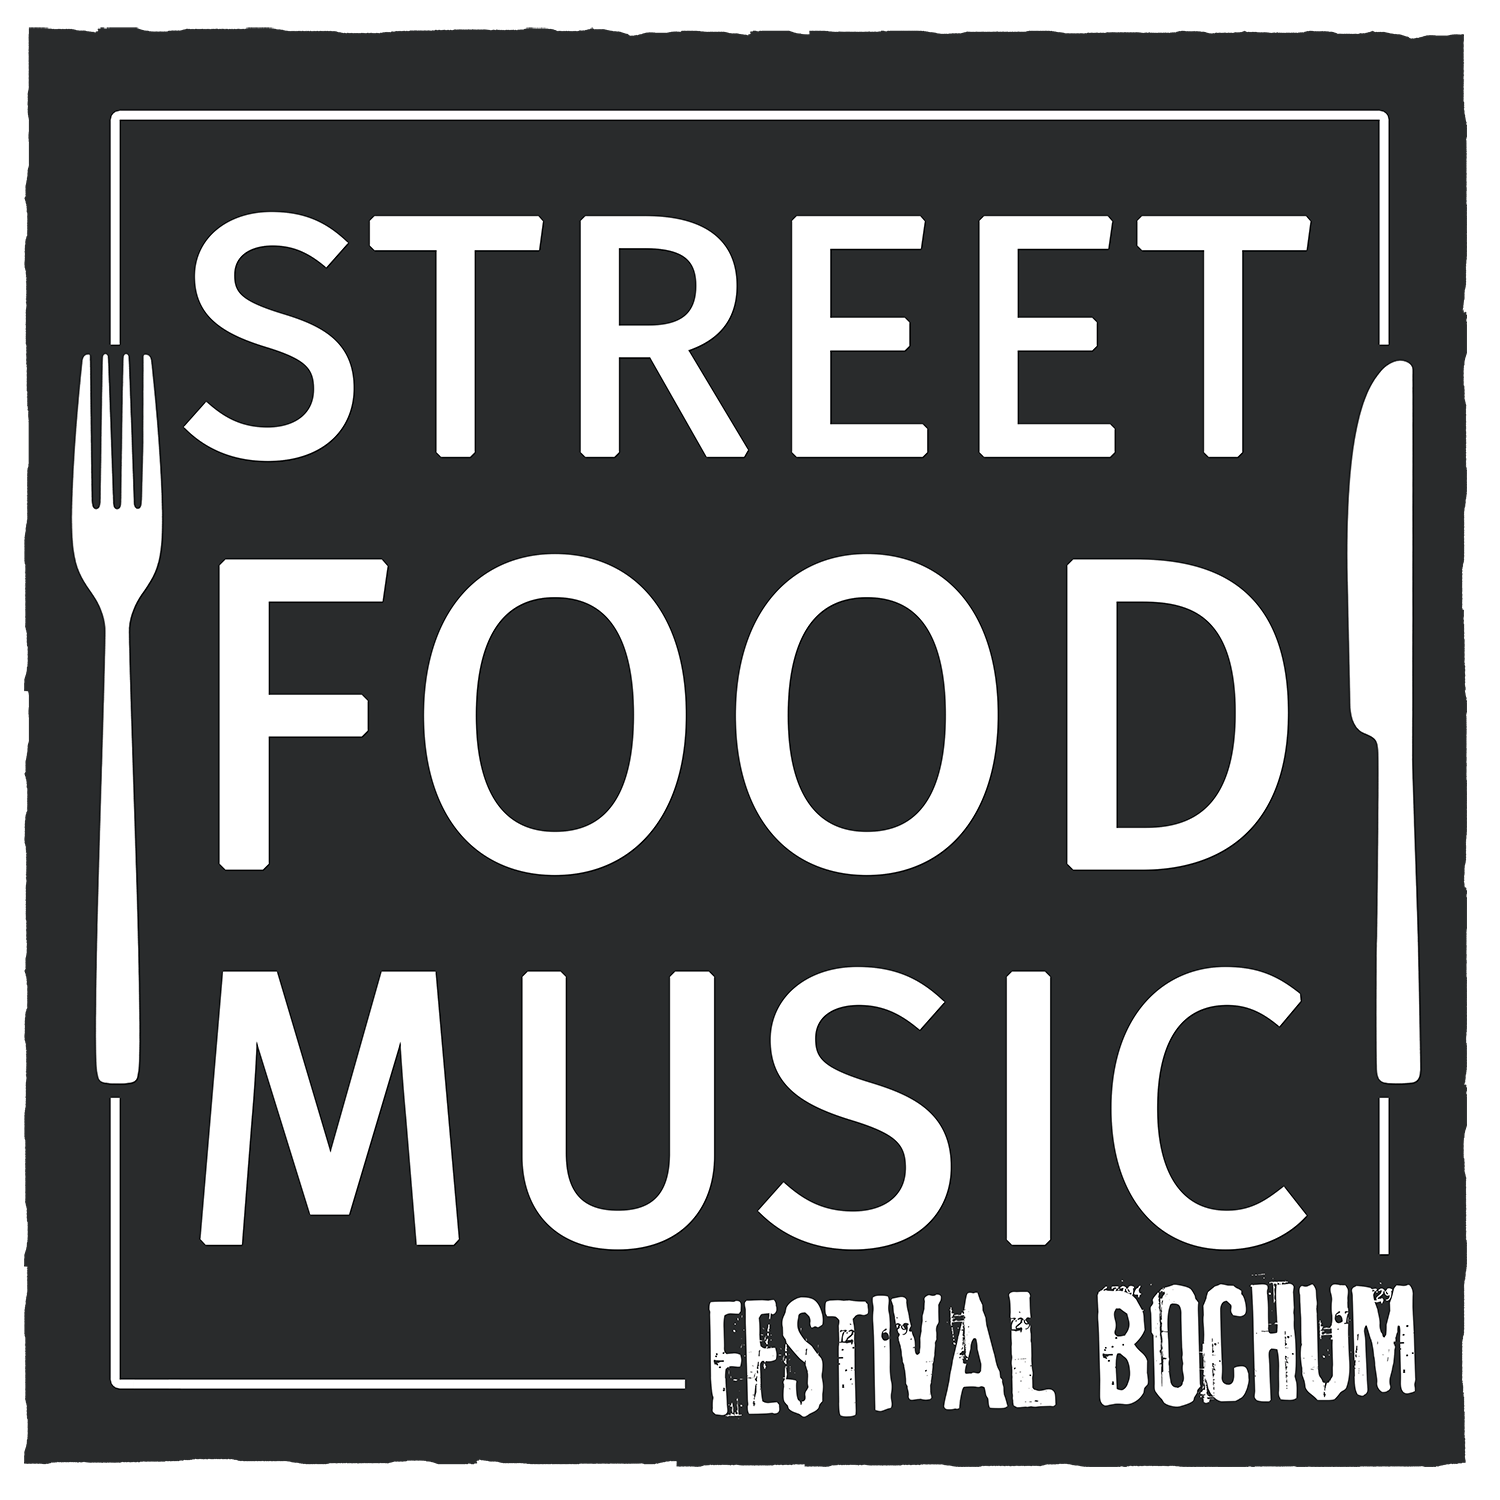 Street Food & Music Festival Bochum